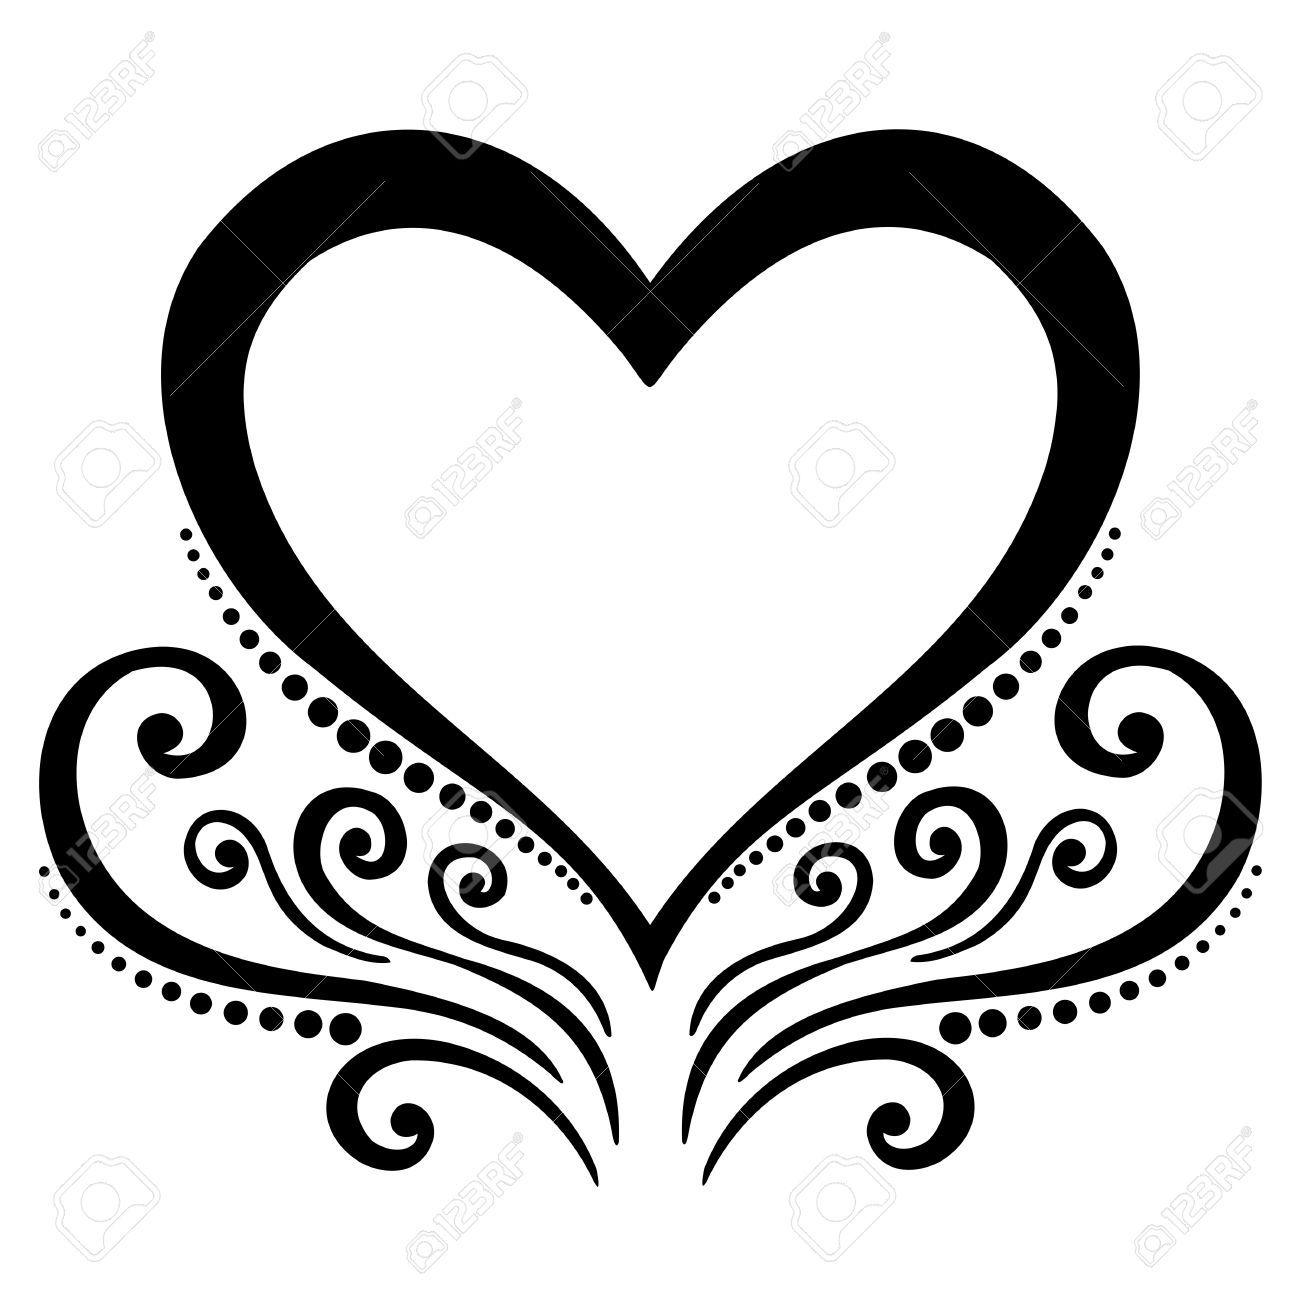 Black and Red Heart Logo - heart design.wagenaardentistry.com